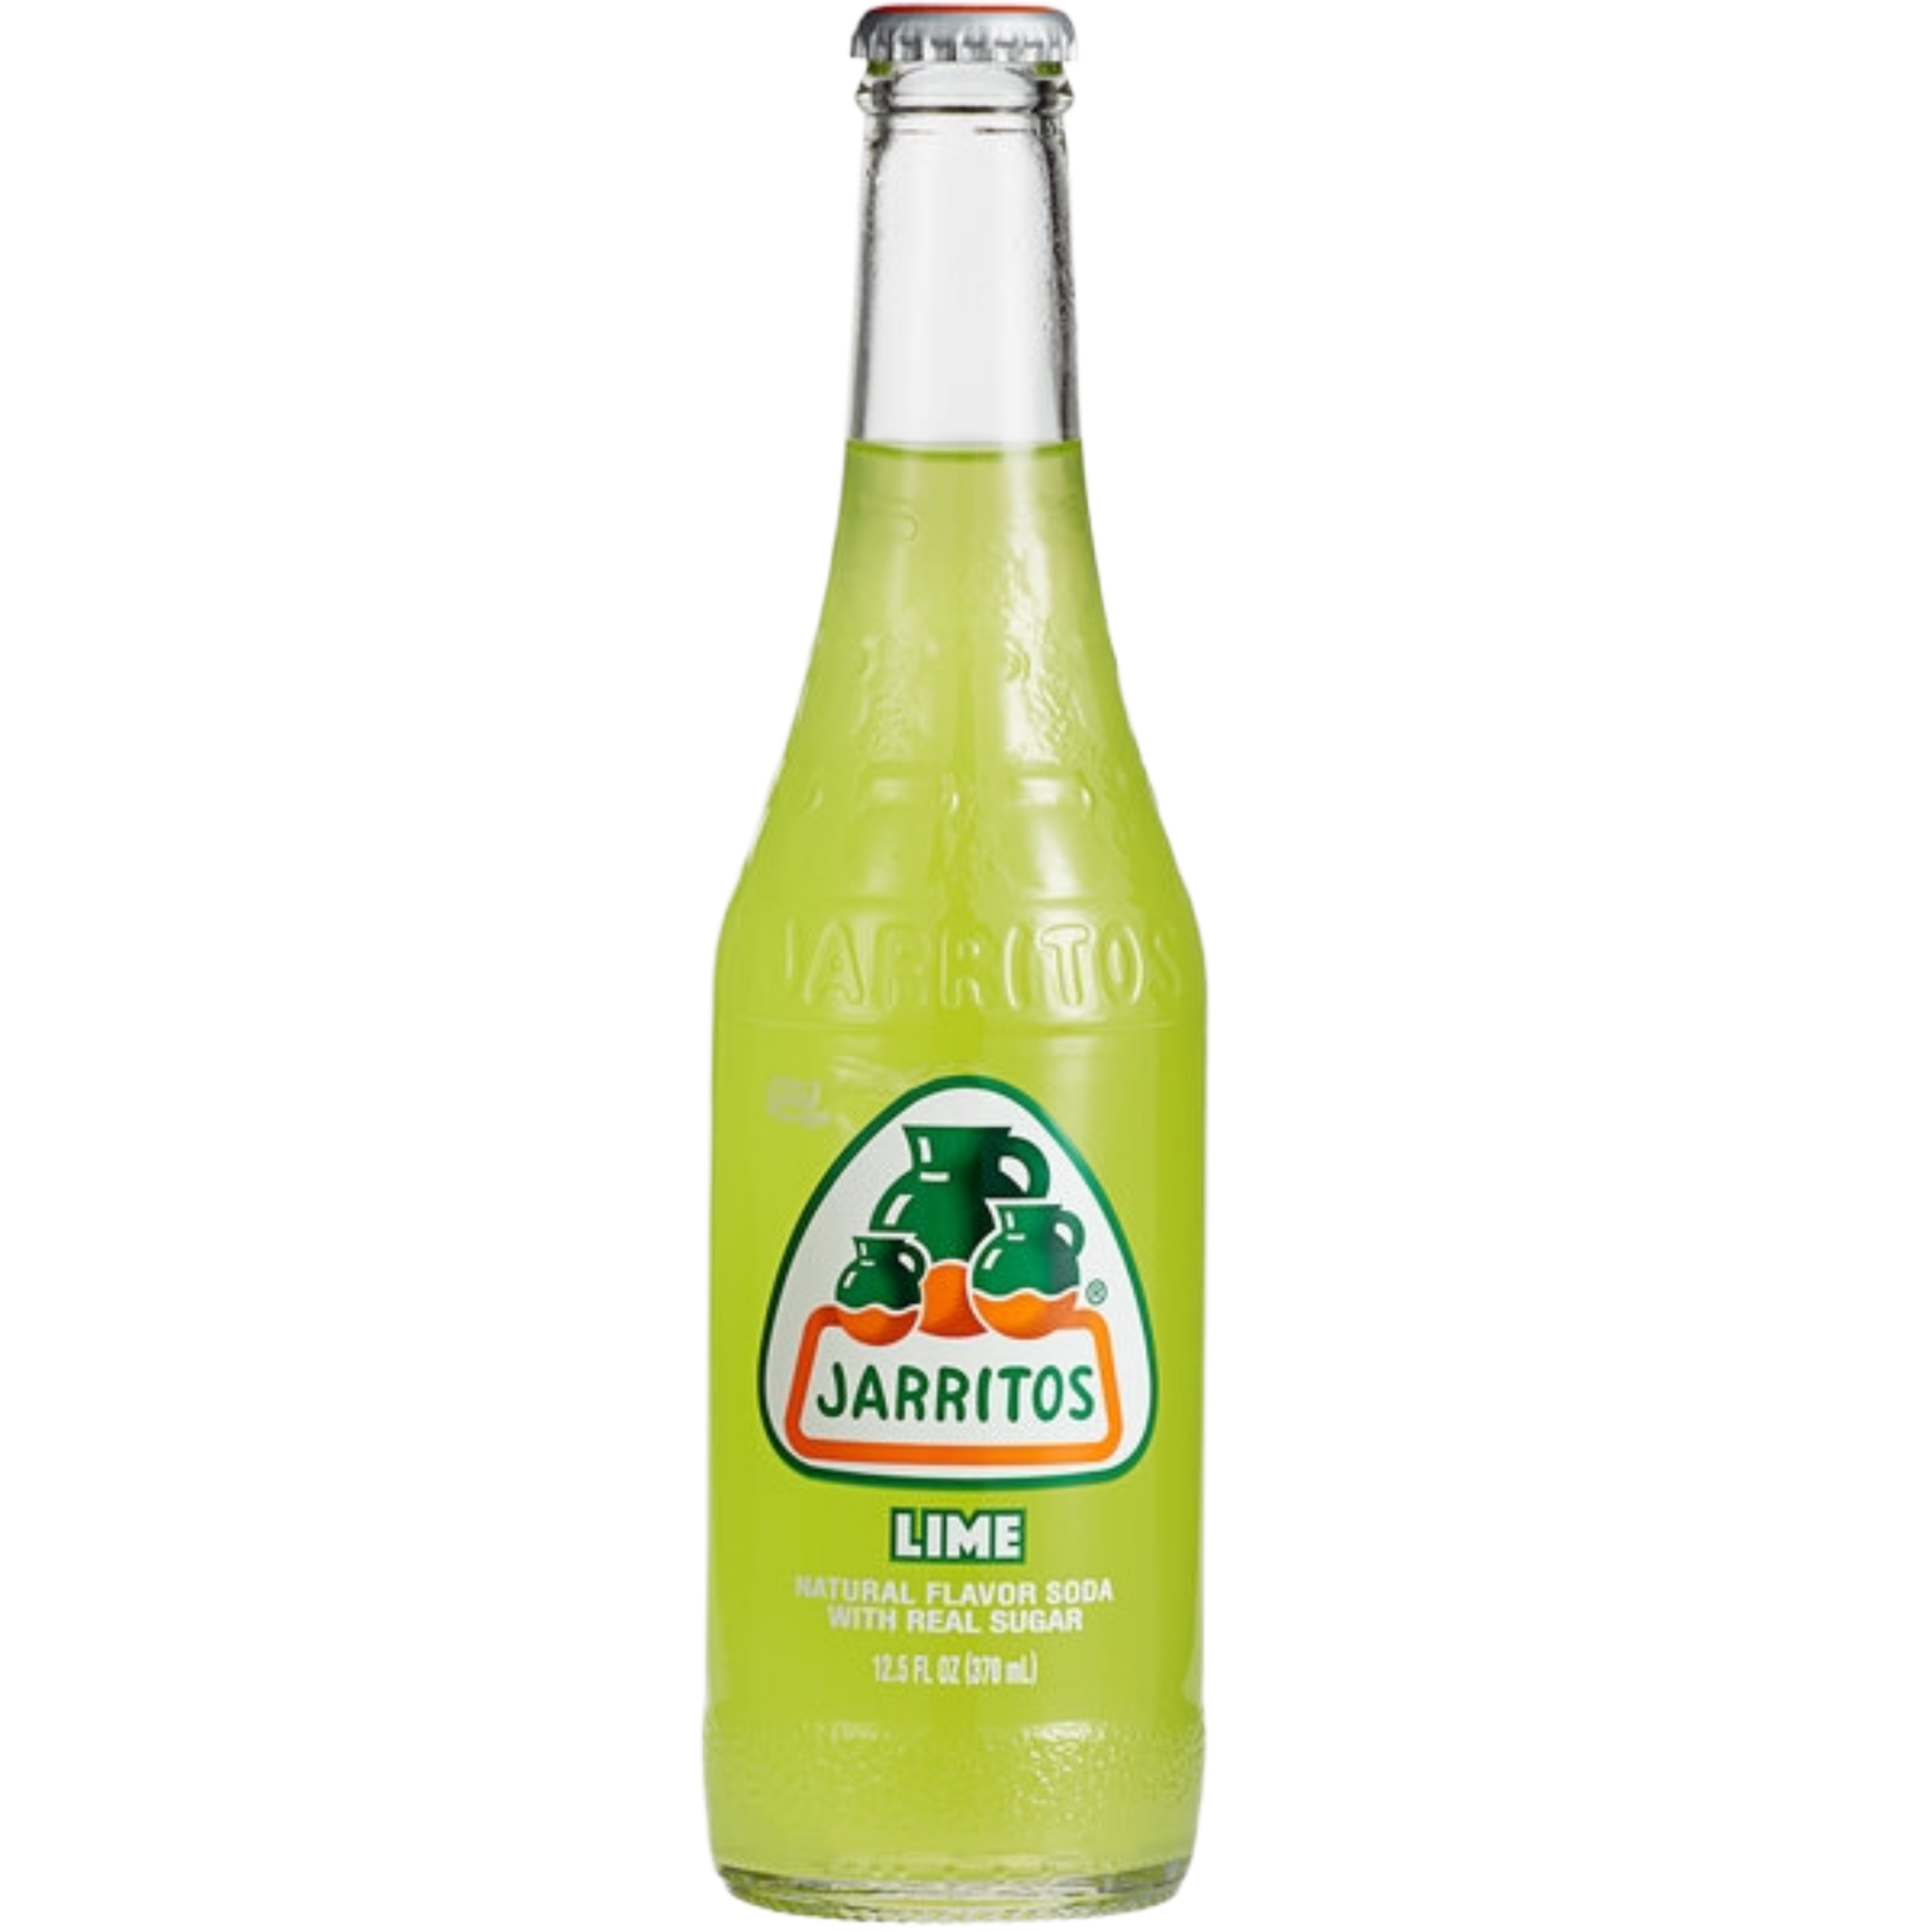 Jarritos Lime (12.5 oz)